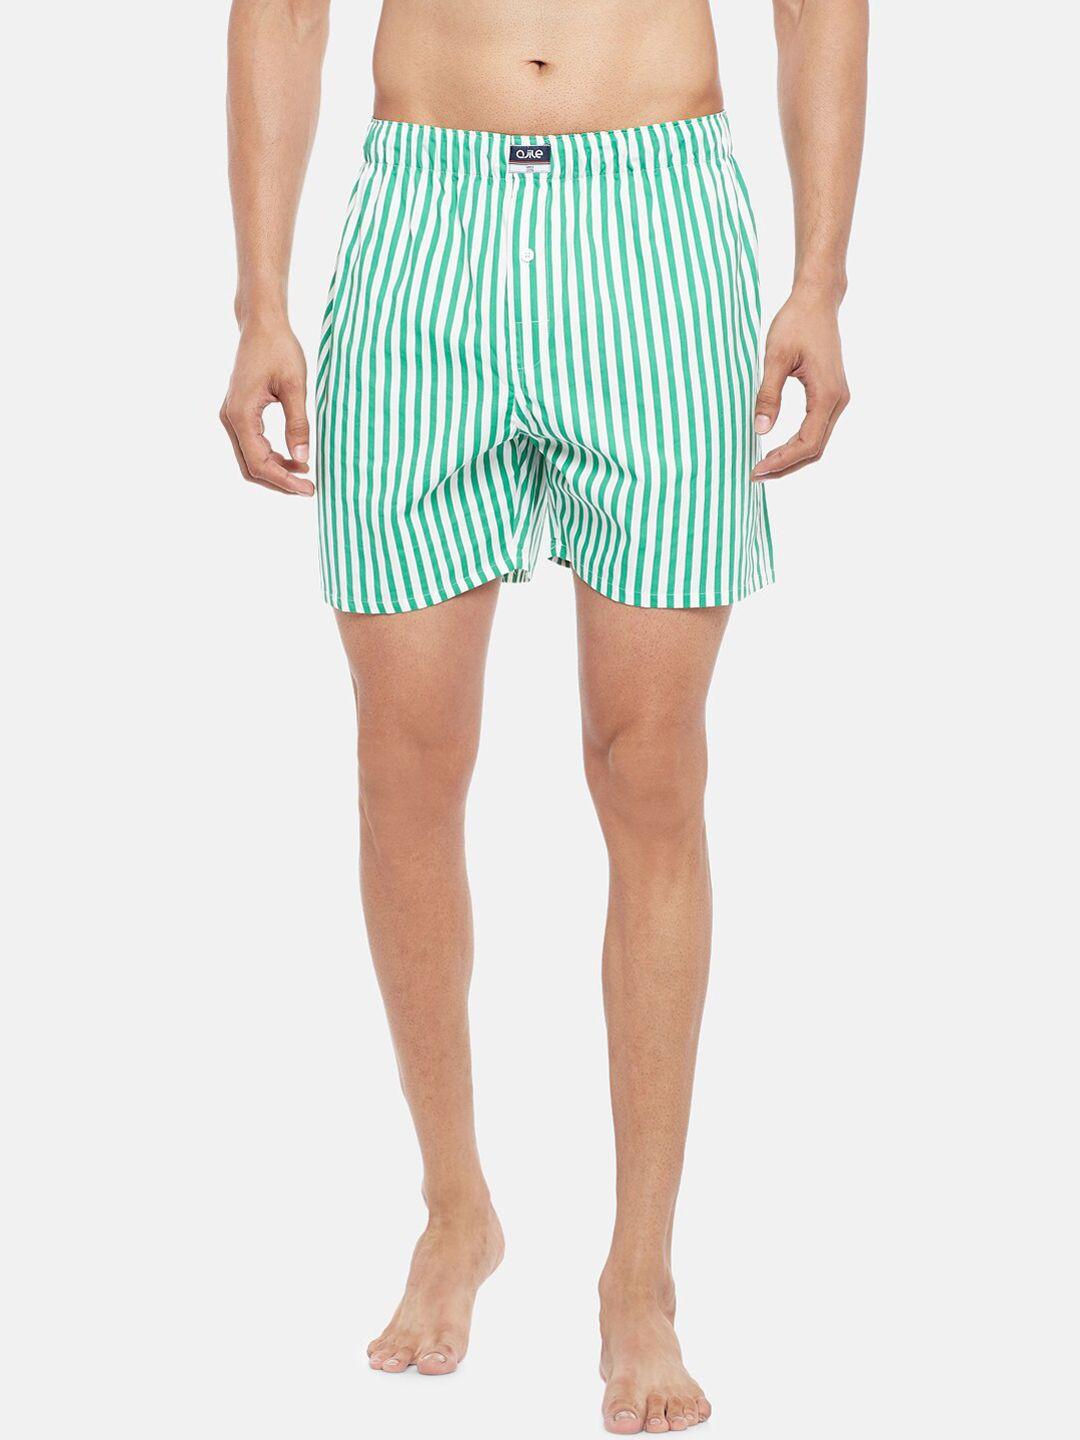 ajile by pantaloons men green & white striped pure cotton boxers 8905172701712